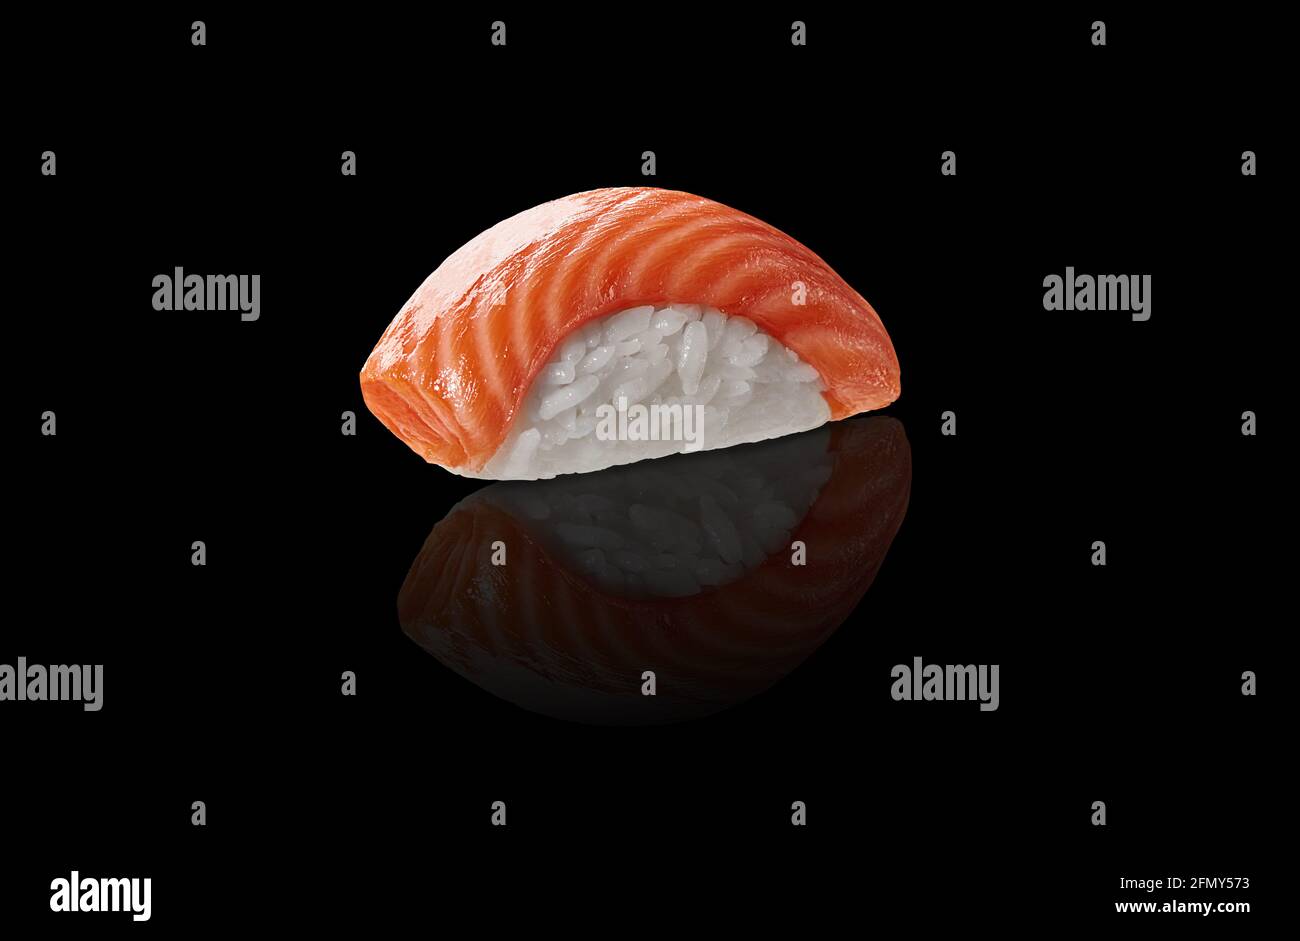 One nigiri sushi with salmon on black background with reflection Stock Photo